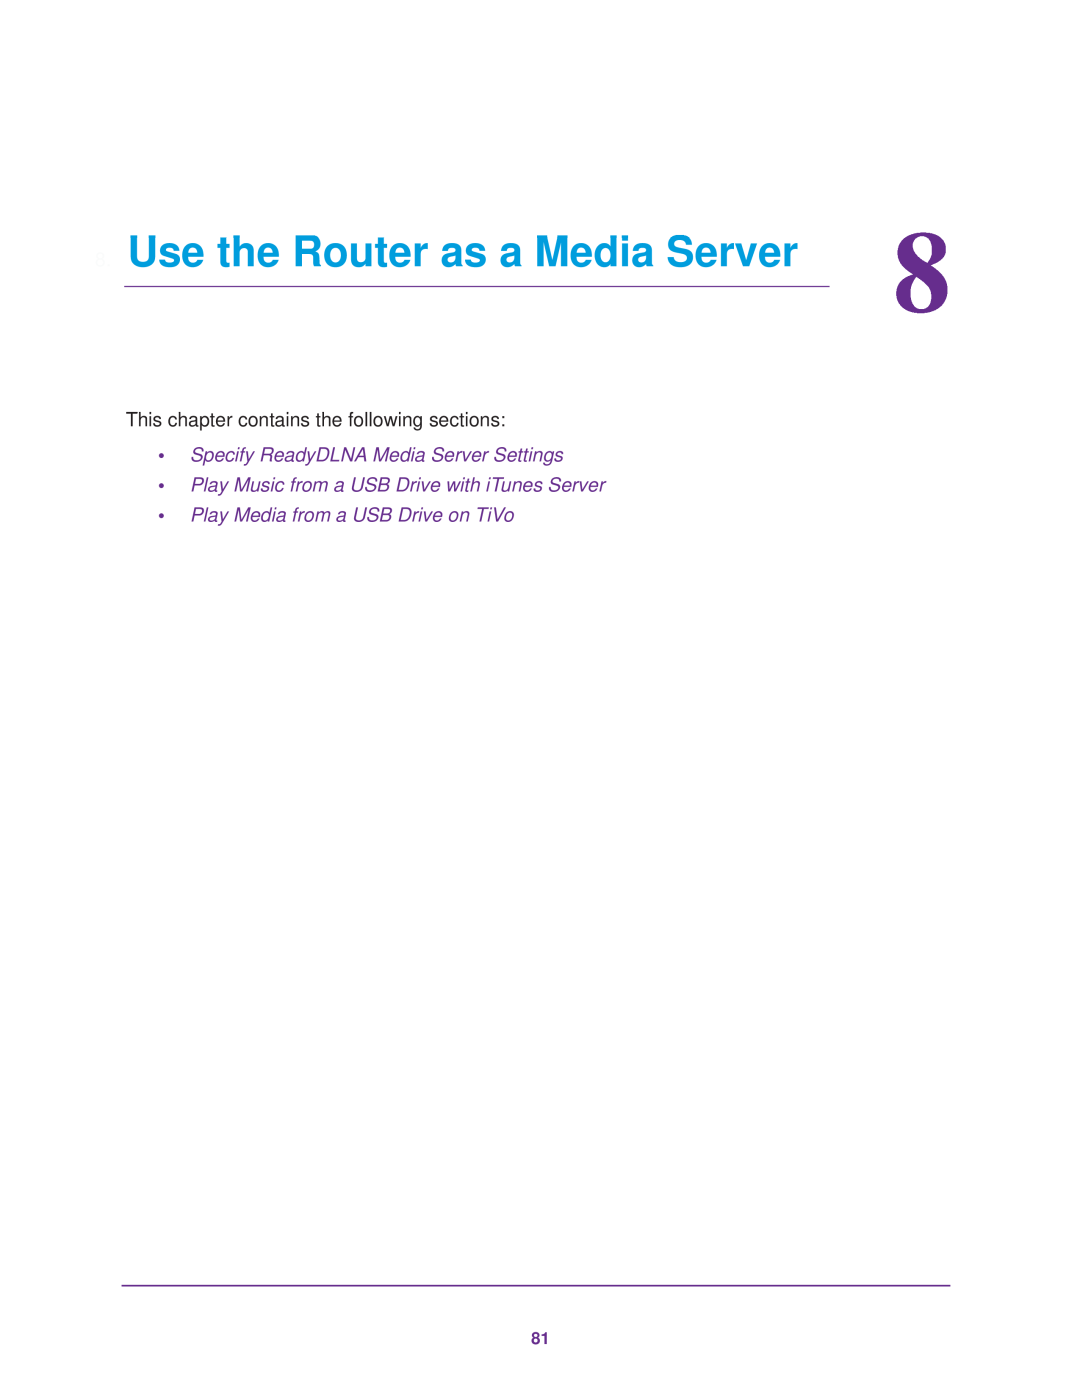 NETGEAR R7000 user manual Use the Router as a Media Server, Specify ReadyDLNA Media Server Settings 